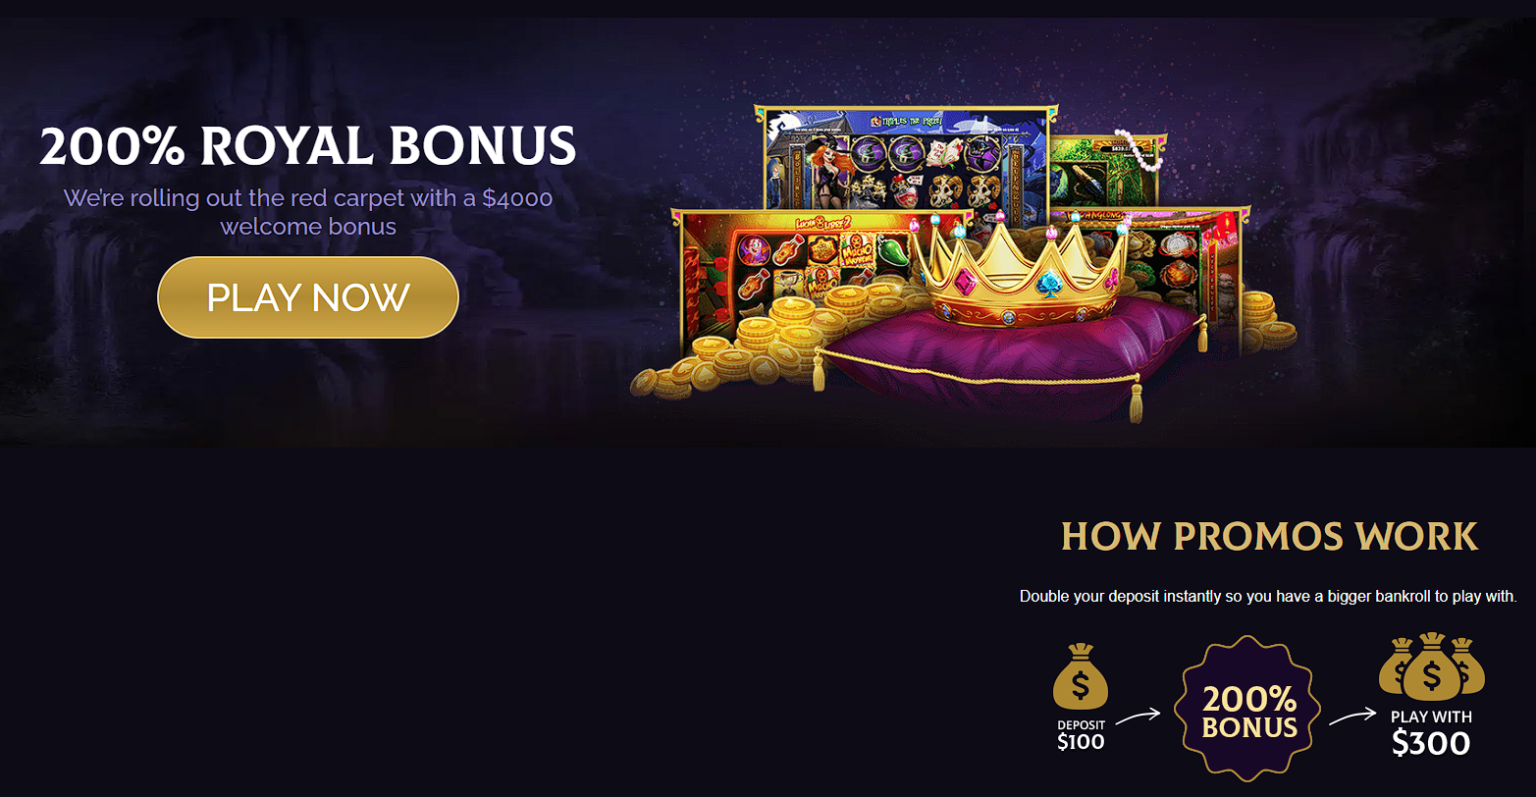 royal ace casino no bonus deposit codes